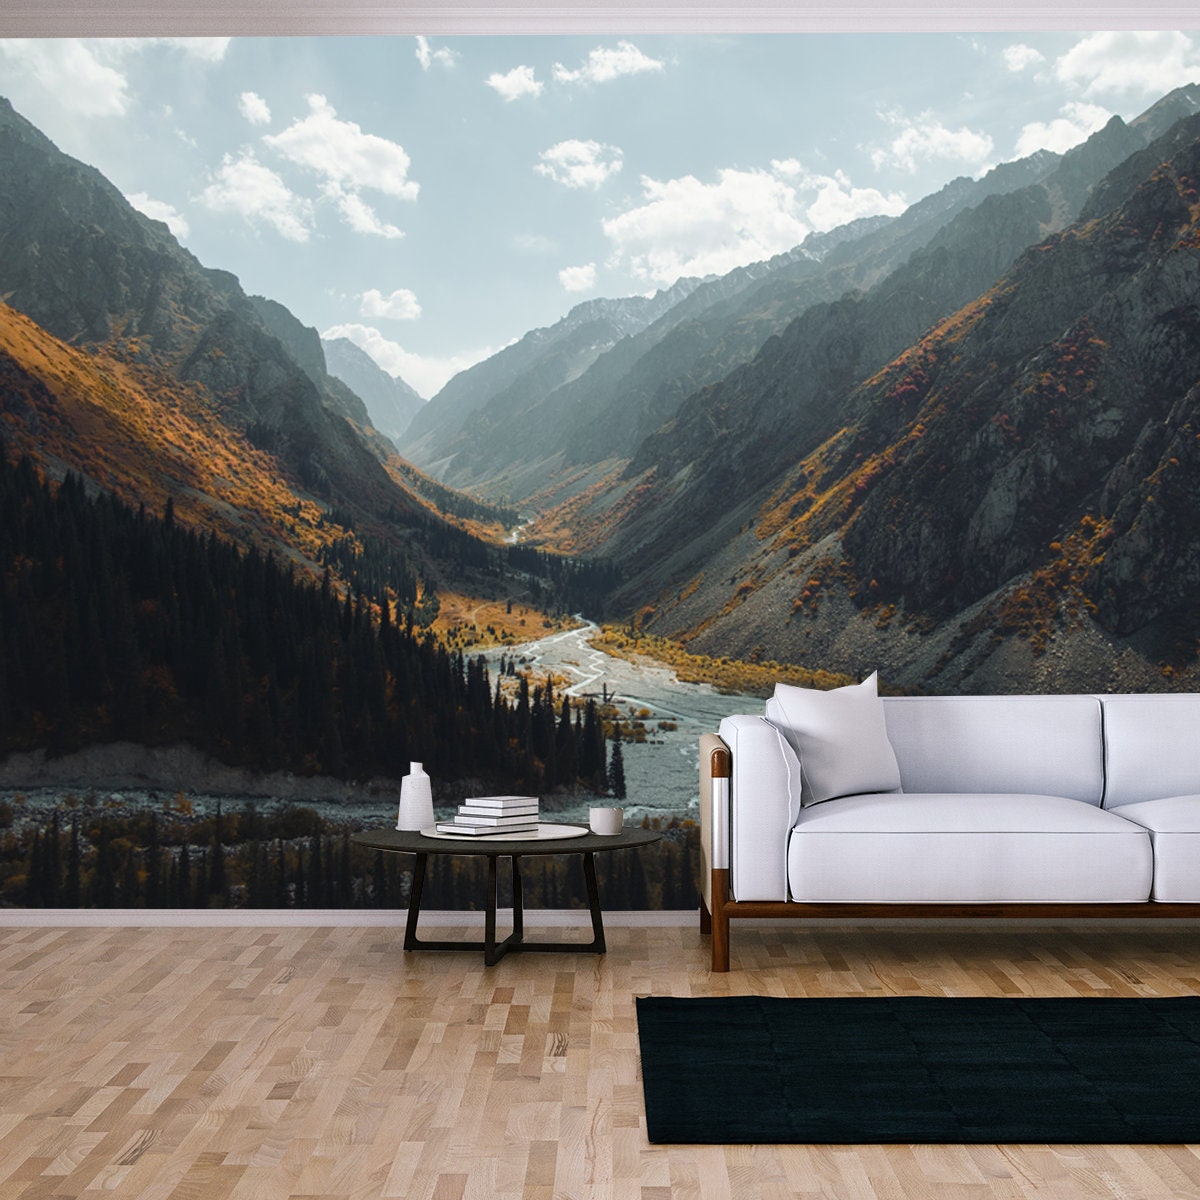 Ala-Archa Valley, Tian-Shan Mountains, Kyrgyzstan Wallpaper Living Room Mural